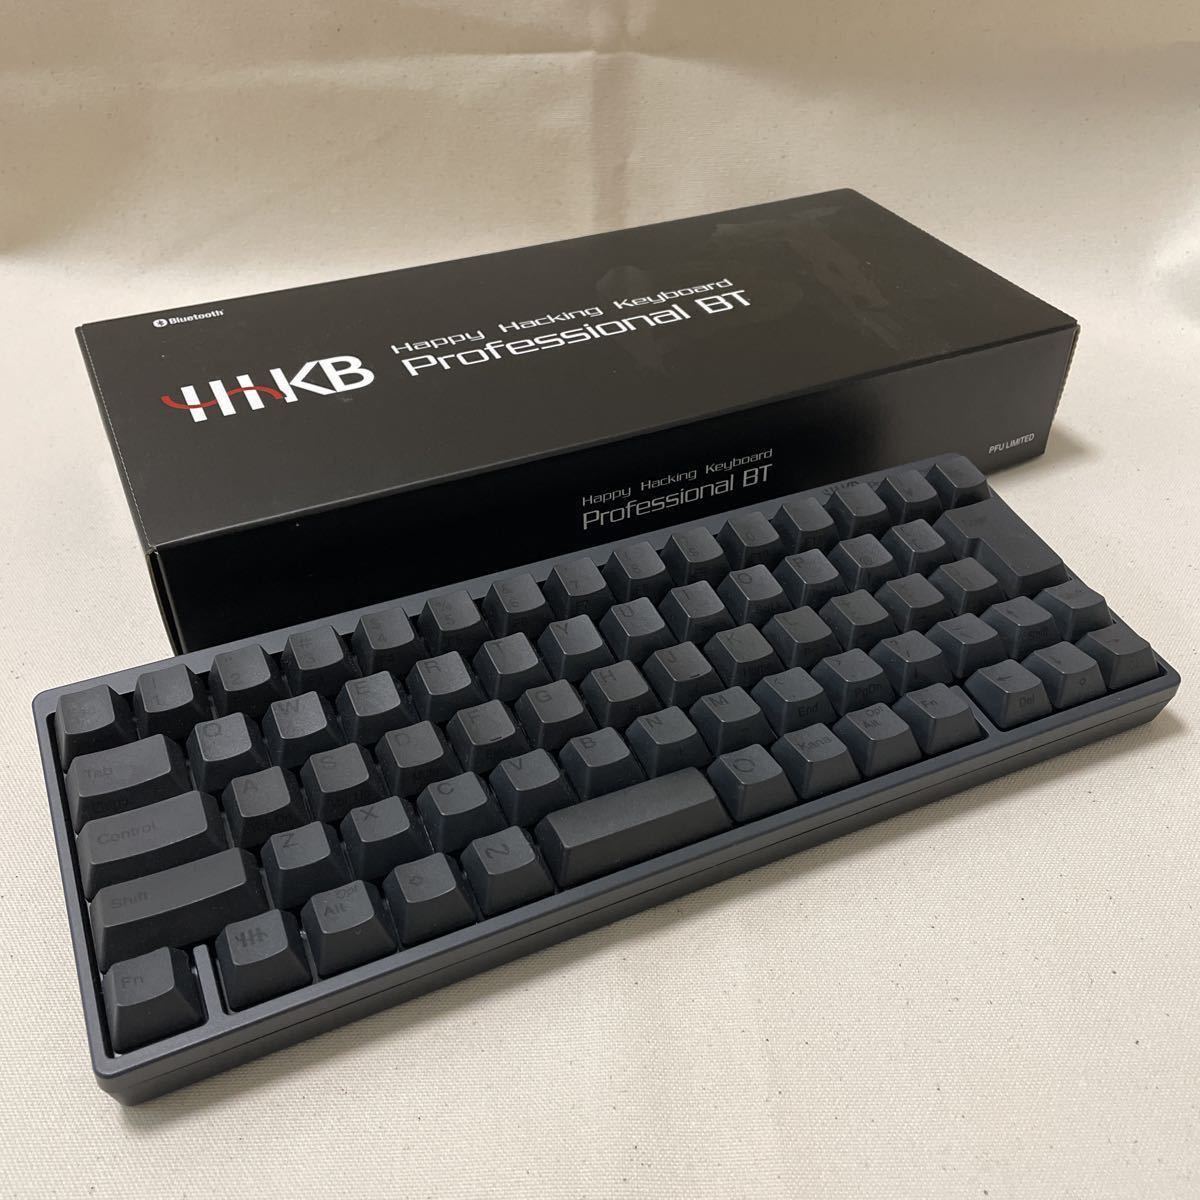 日本特販 【美品】HHKB Professional Bluetoothキーボード墨 BT PC周辺機器